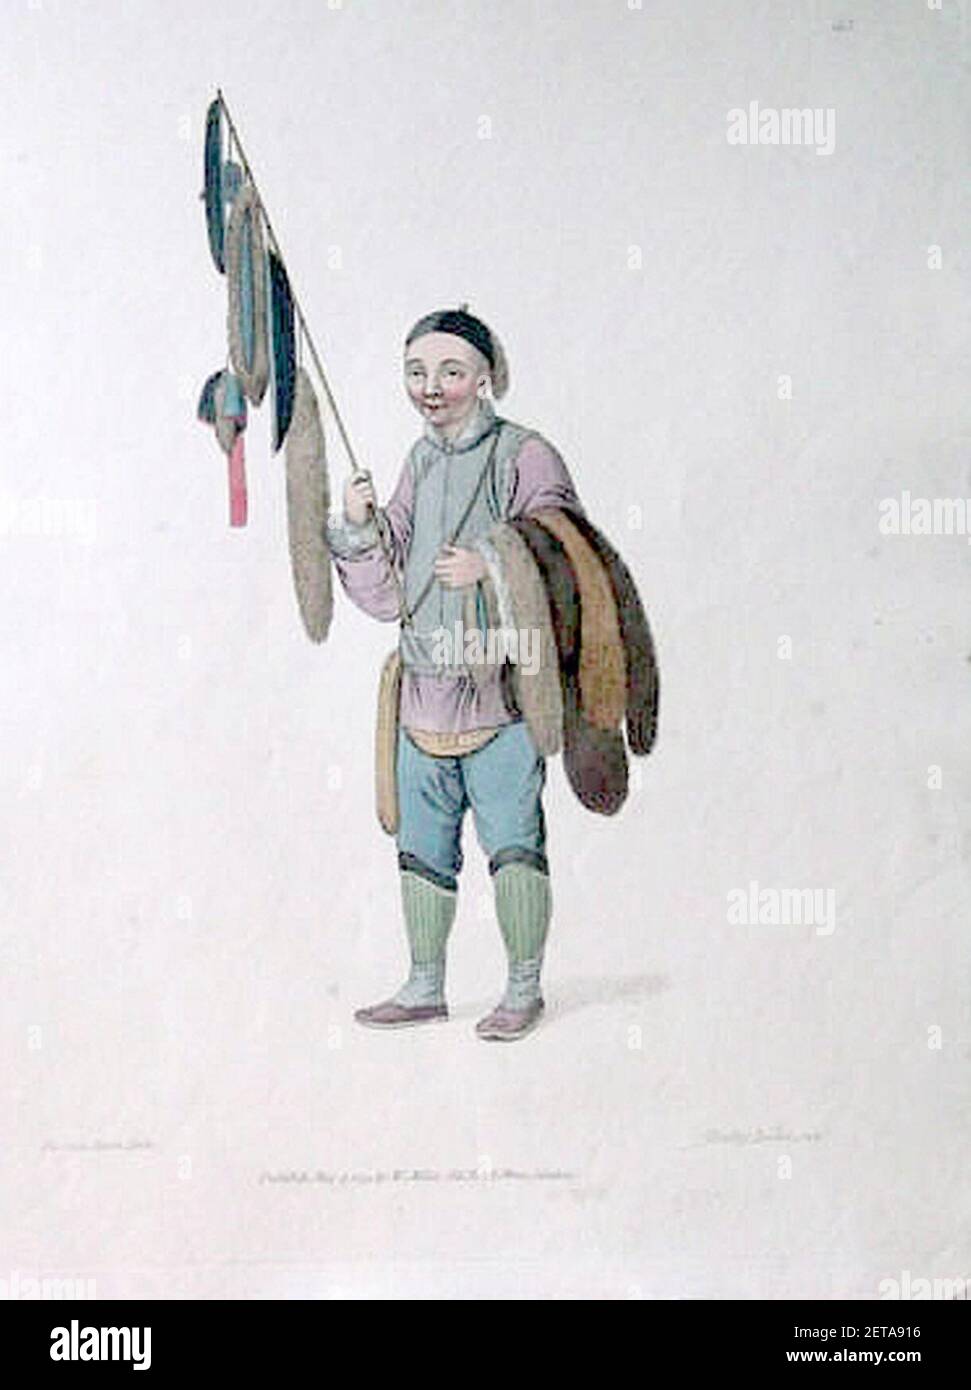 Pelzverkäufer en Chine, pu-qua, canton de Delin, RRR, 1799. Banque D'Images